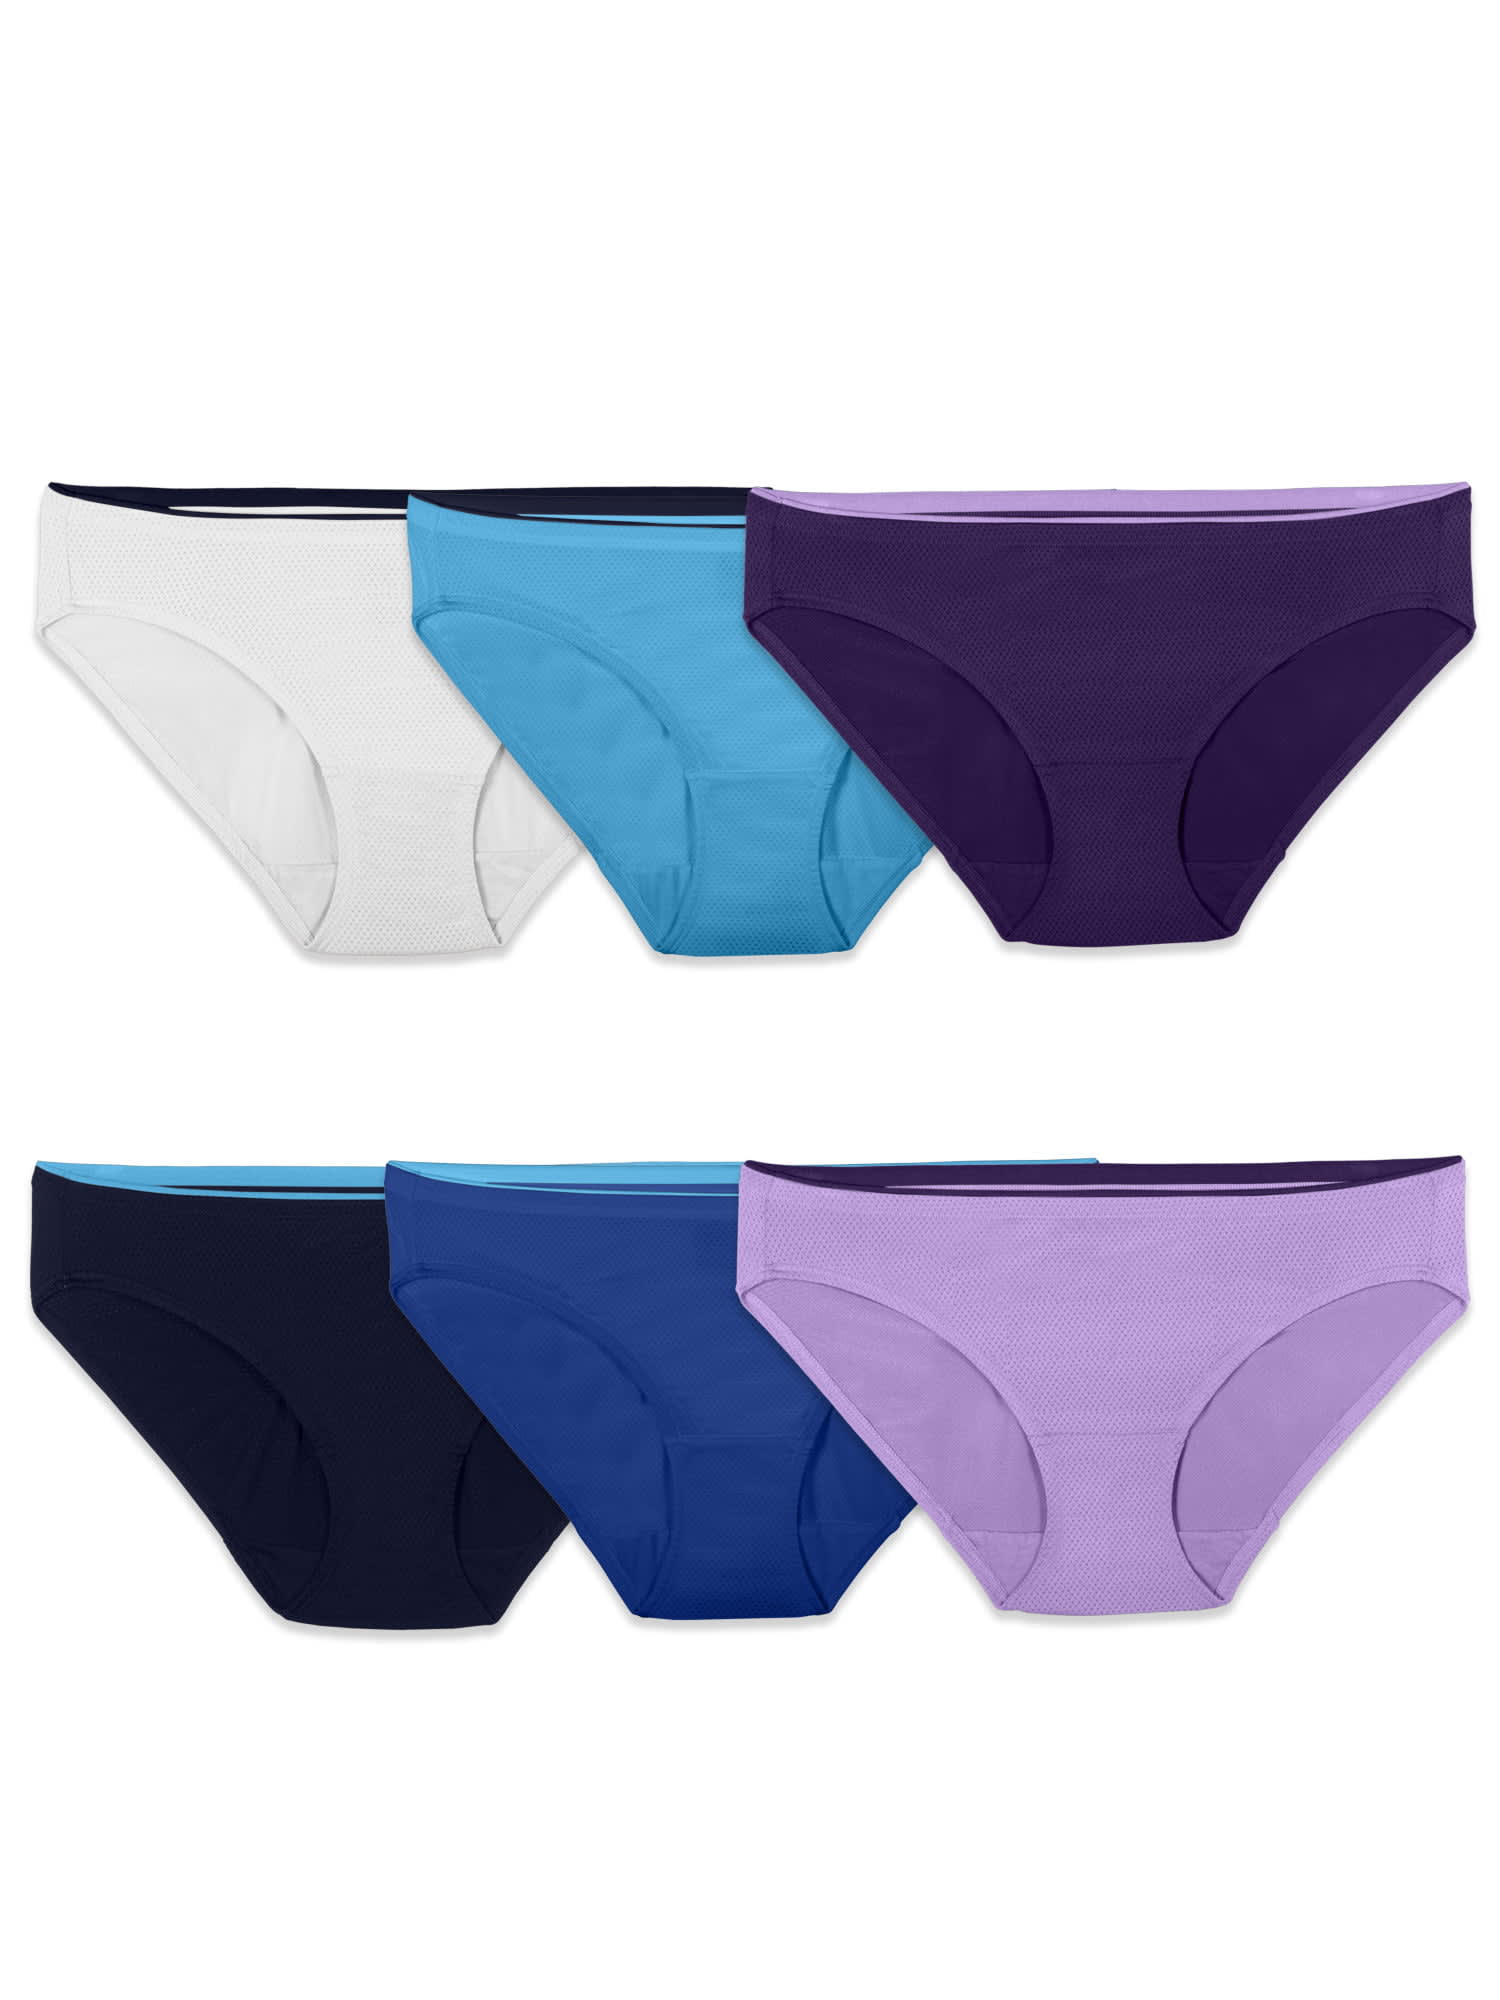 Hanes Women's Cotton Bikini Underwear, 6 Pack - DroneUp Delivery